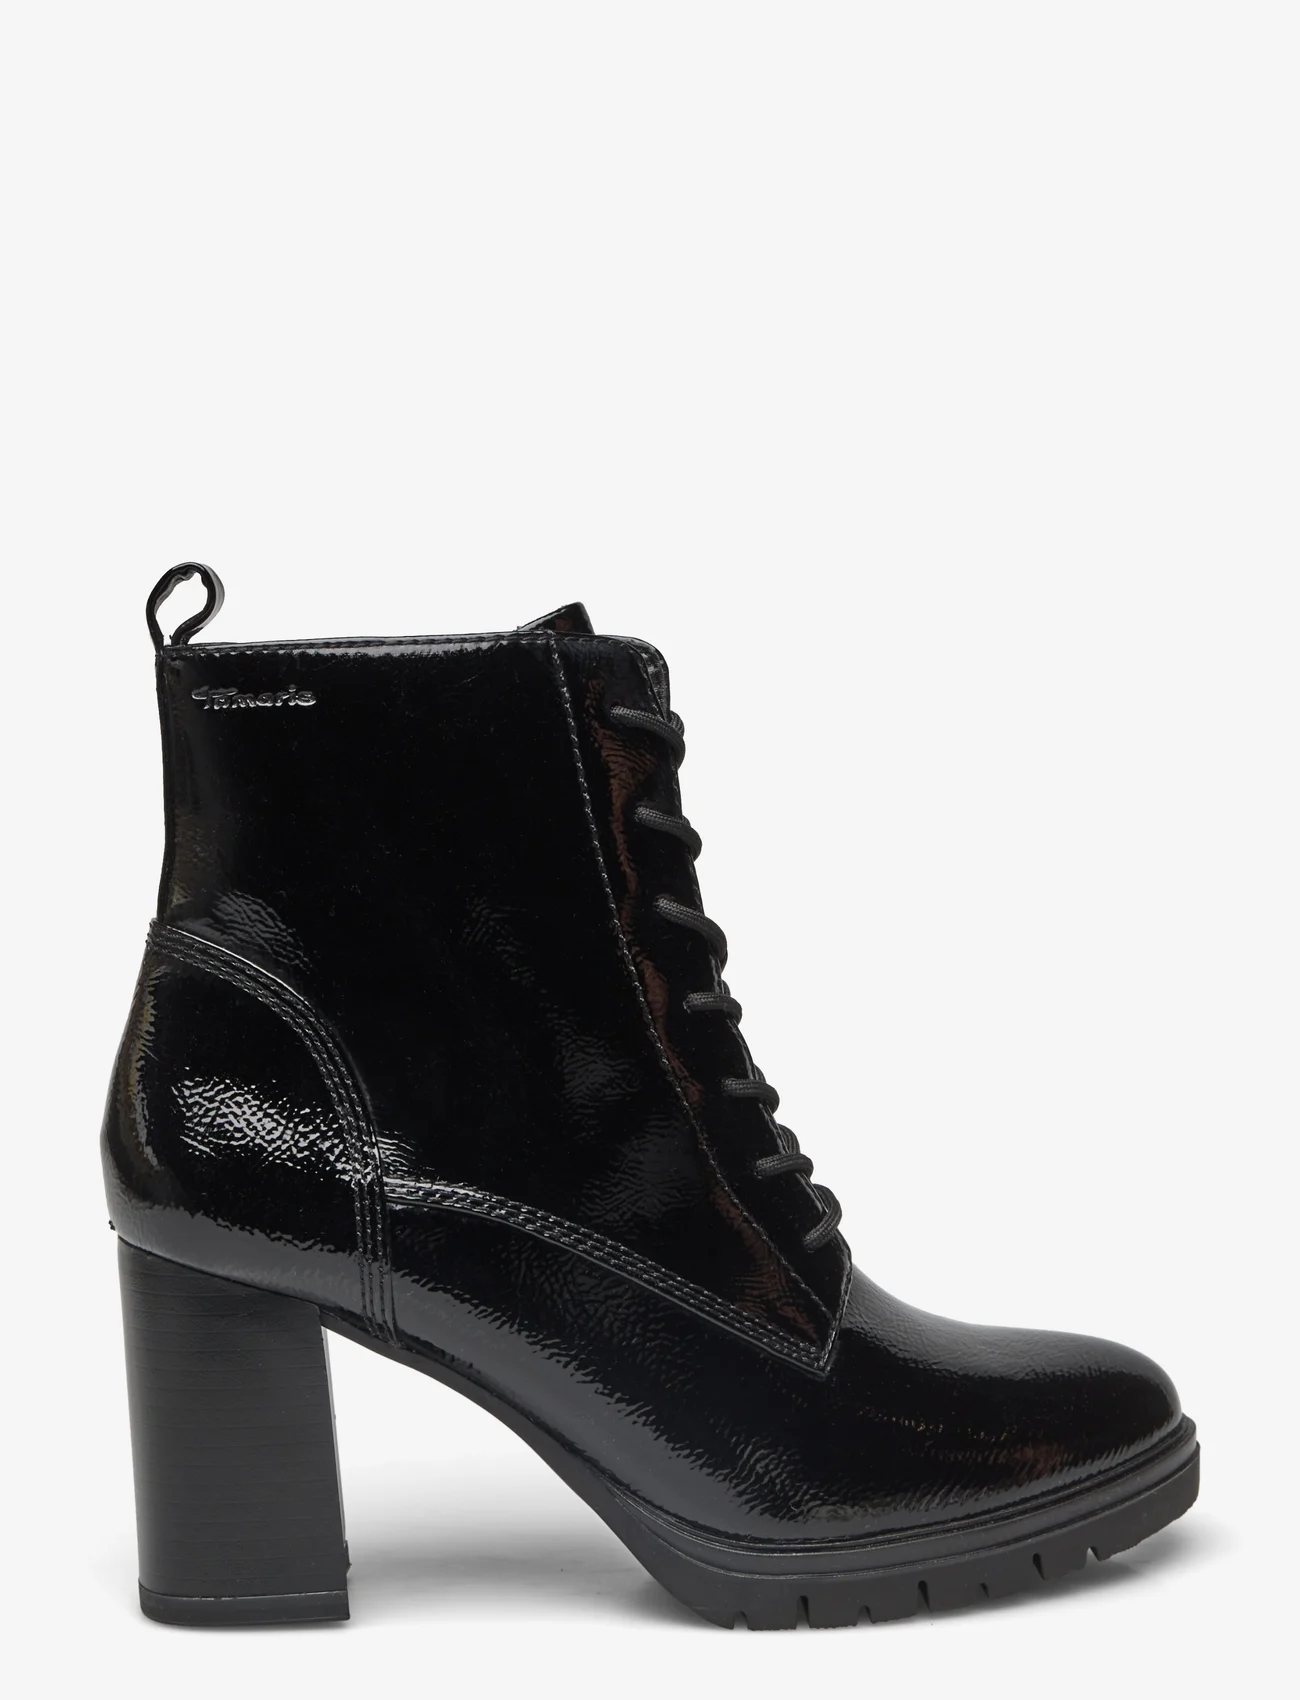 Tamaris - Women Boots - black patent - 1